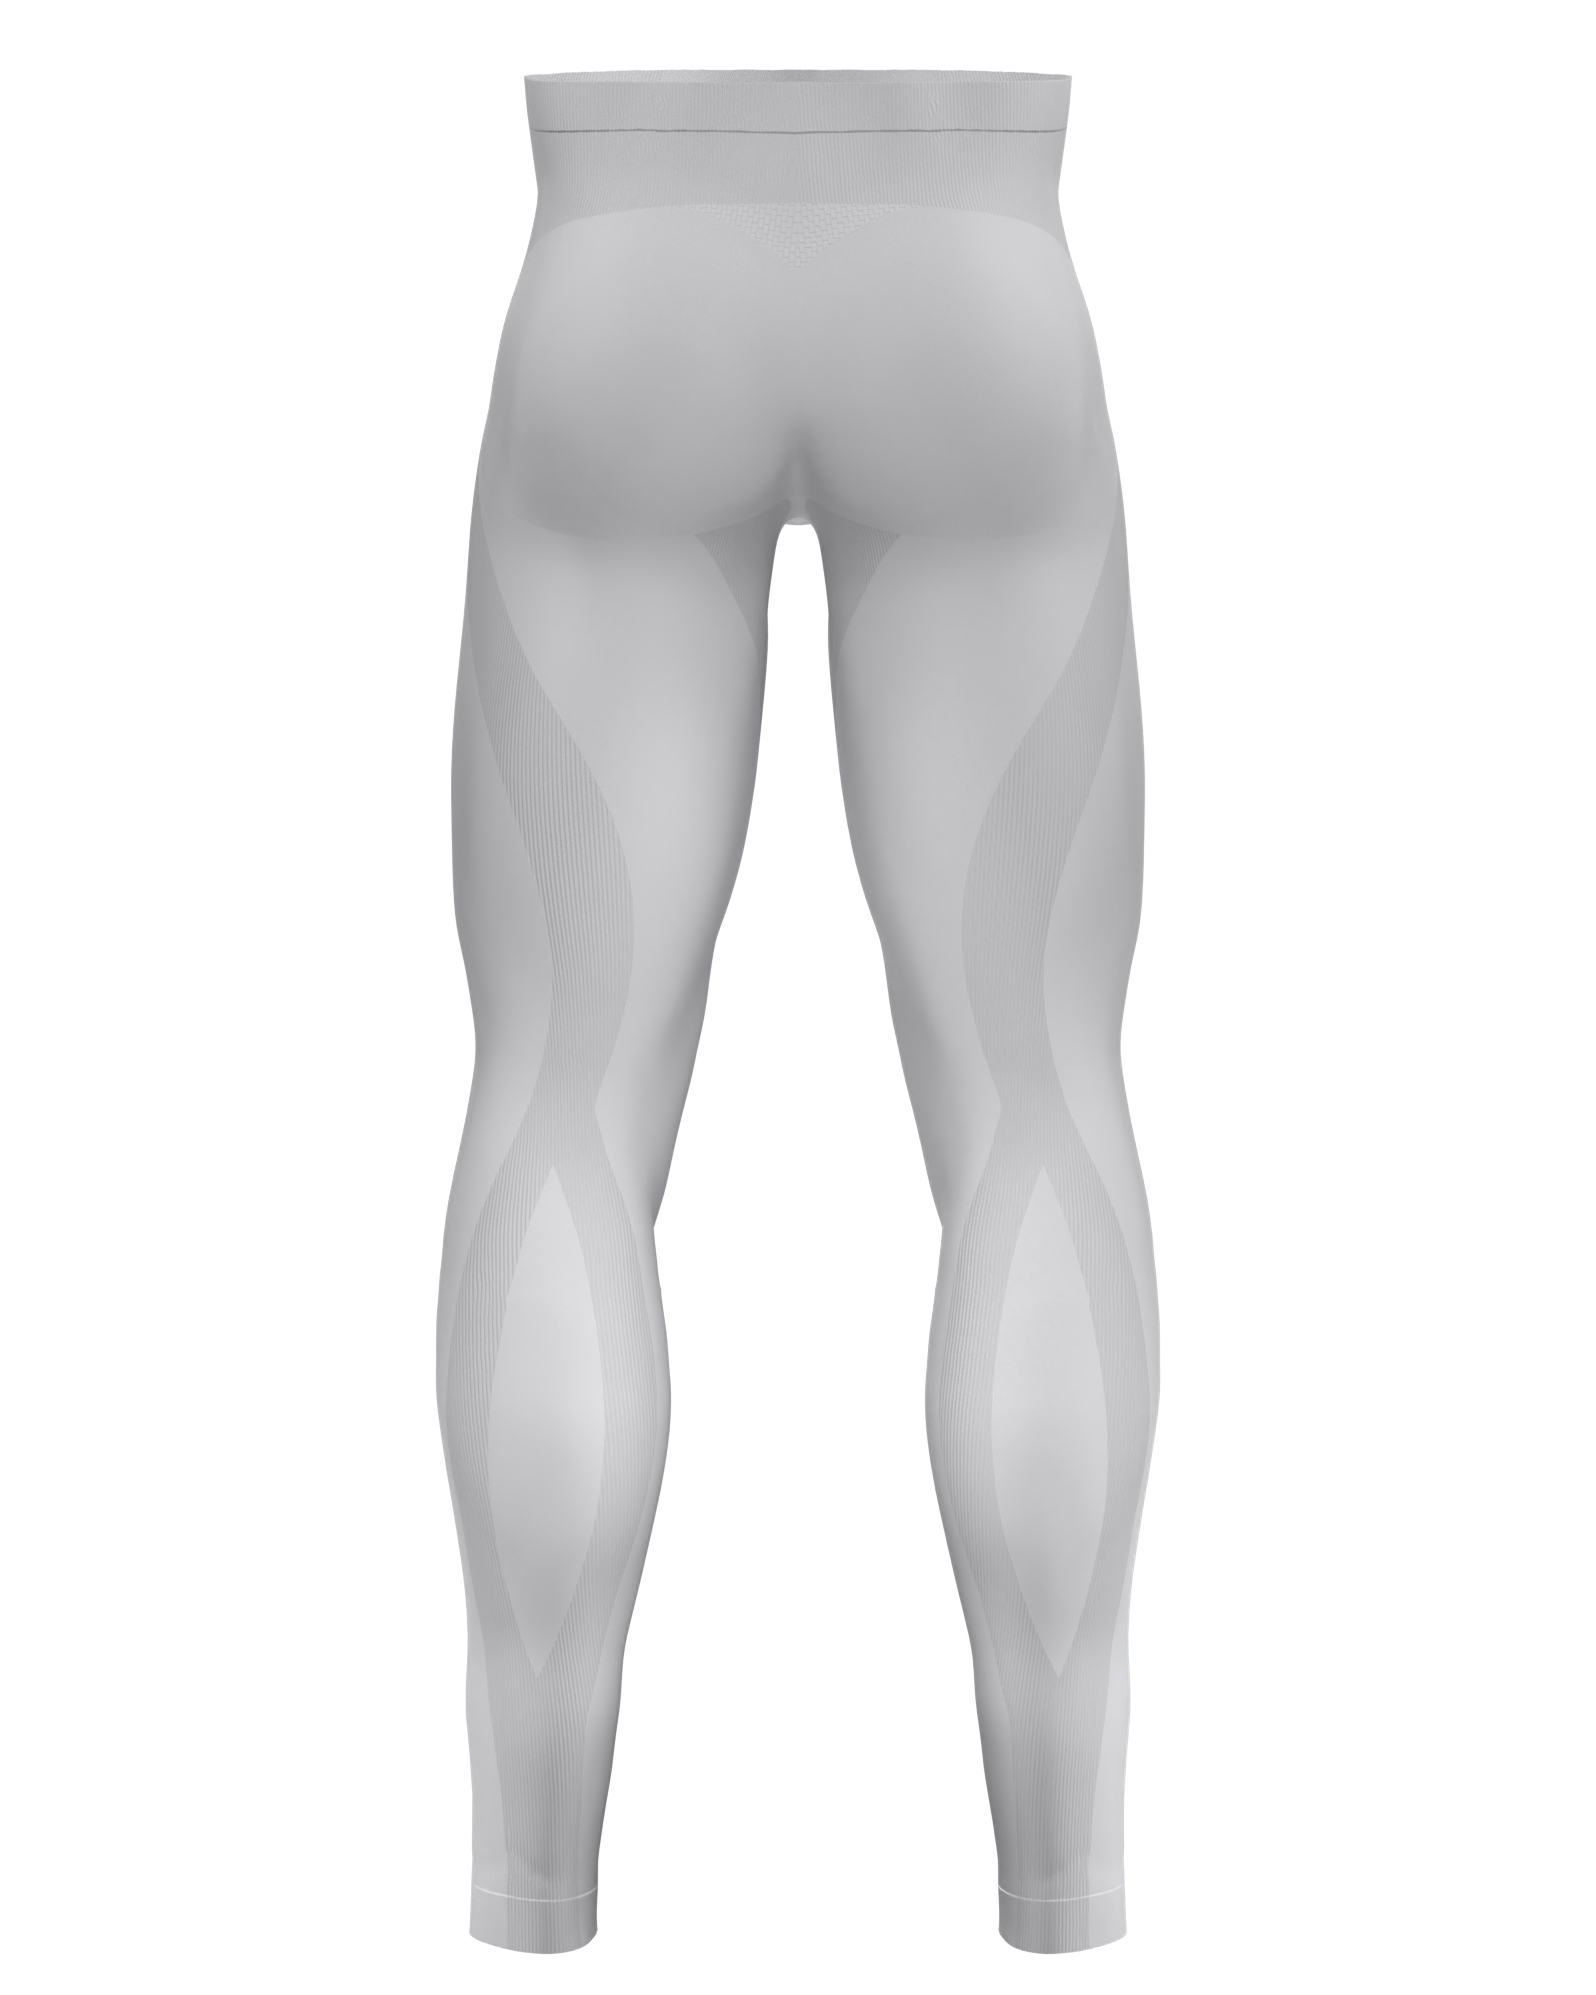 https://www.knapman.eu/product/242-e2g-knapman-mens-compression-tights-long-45-white.jpg